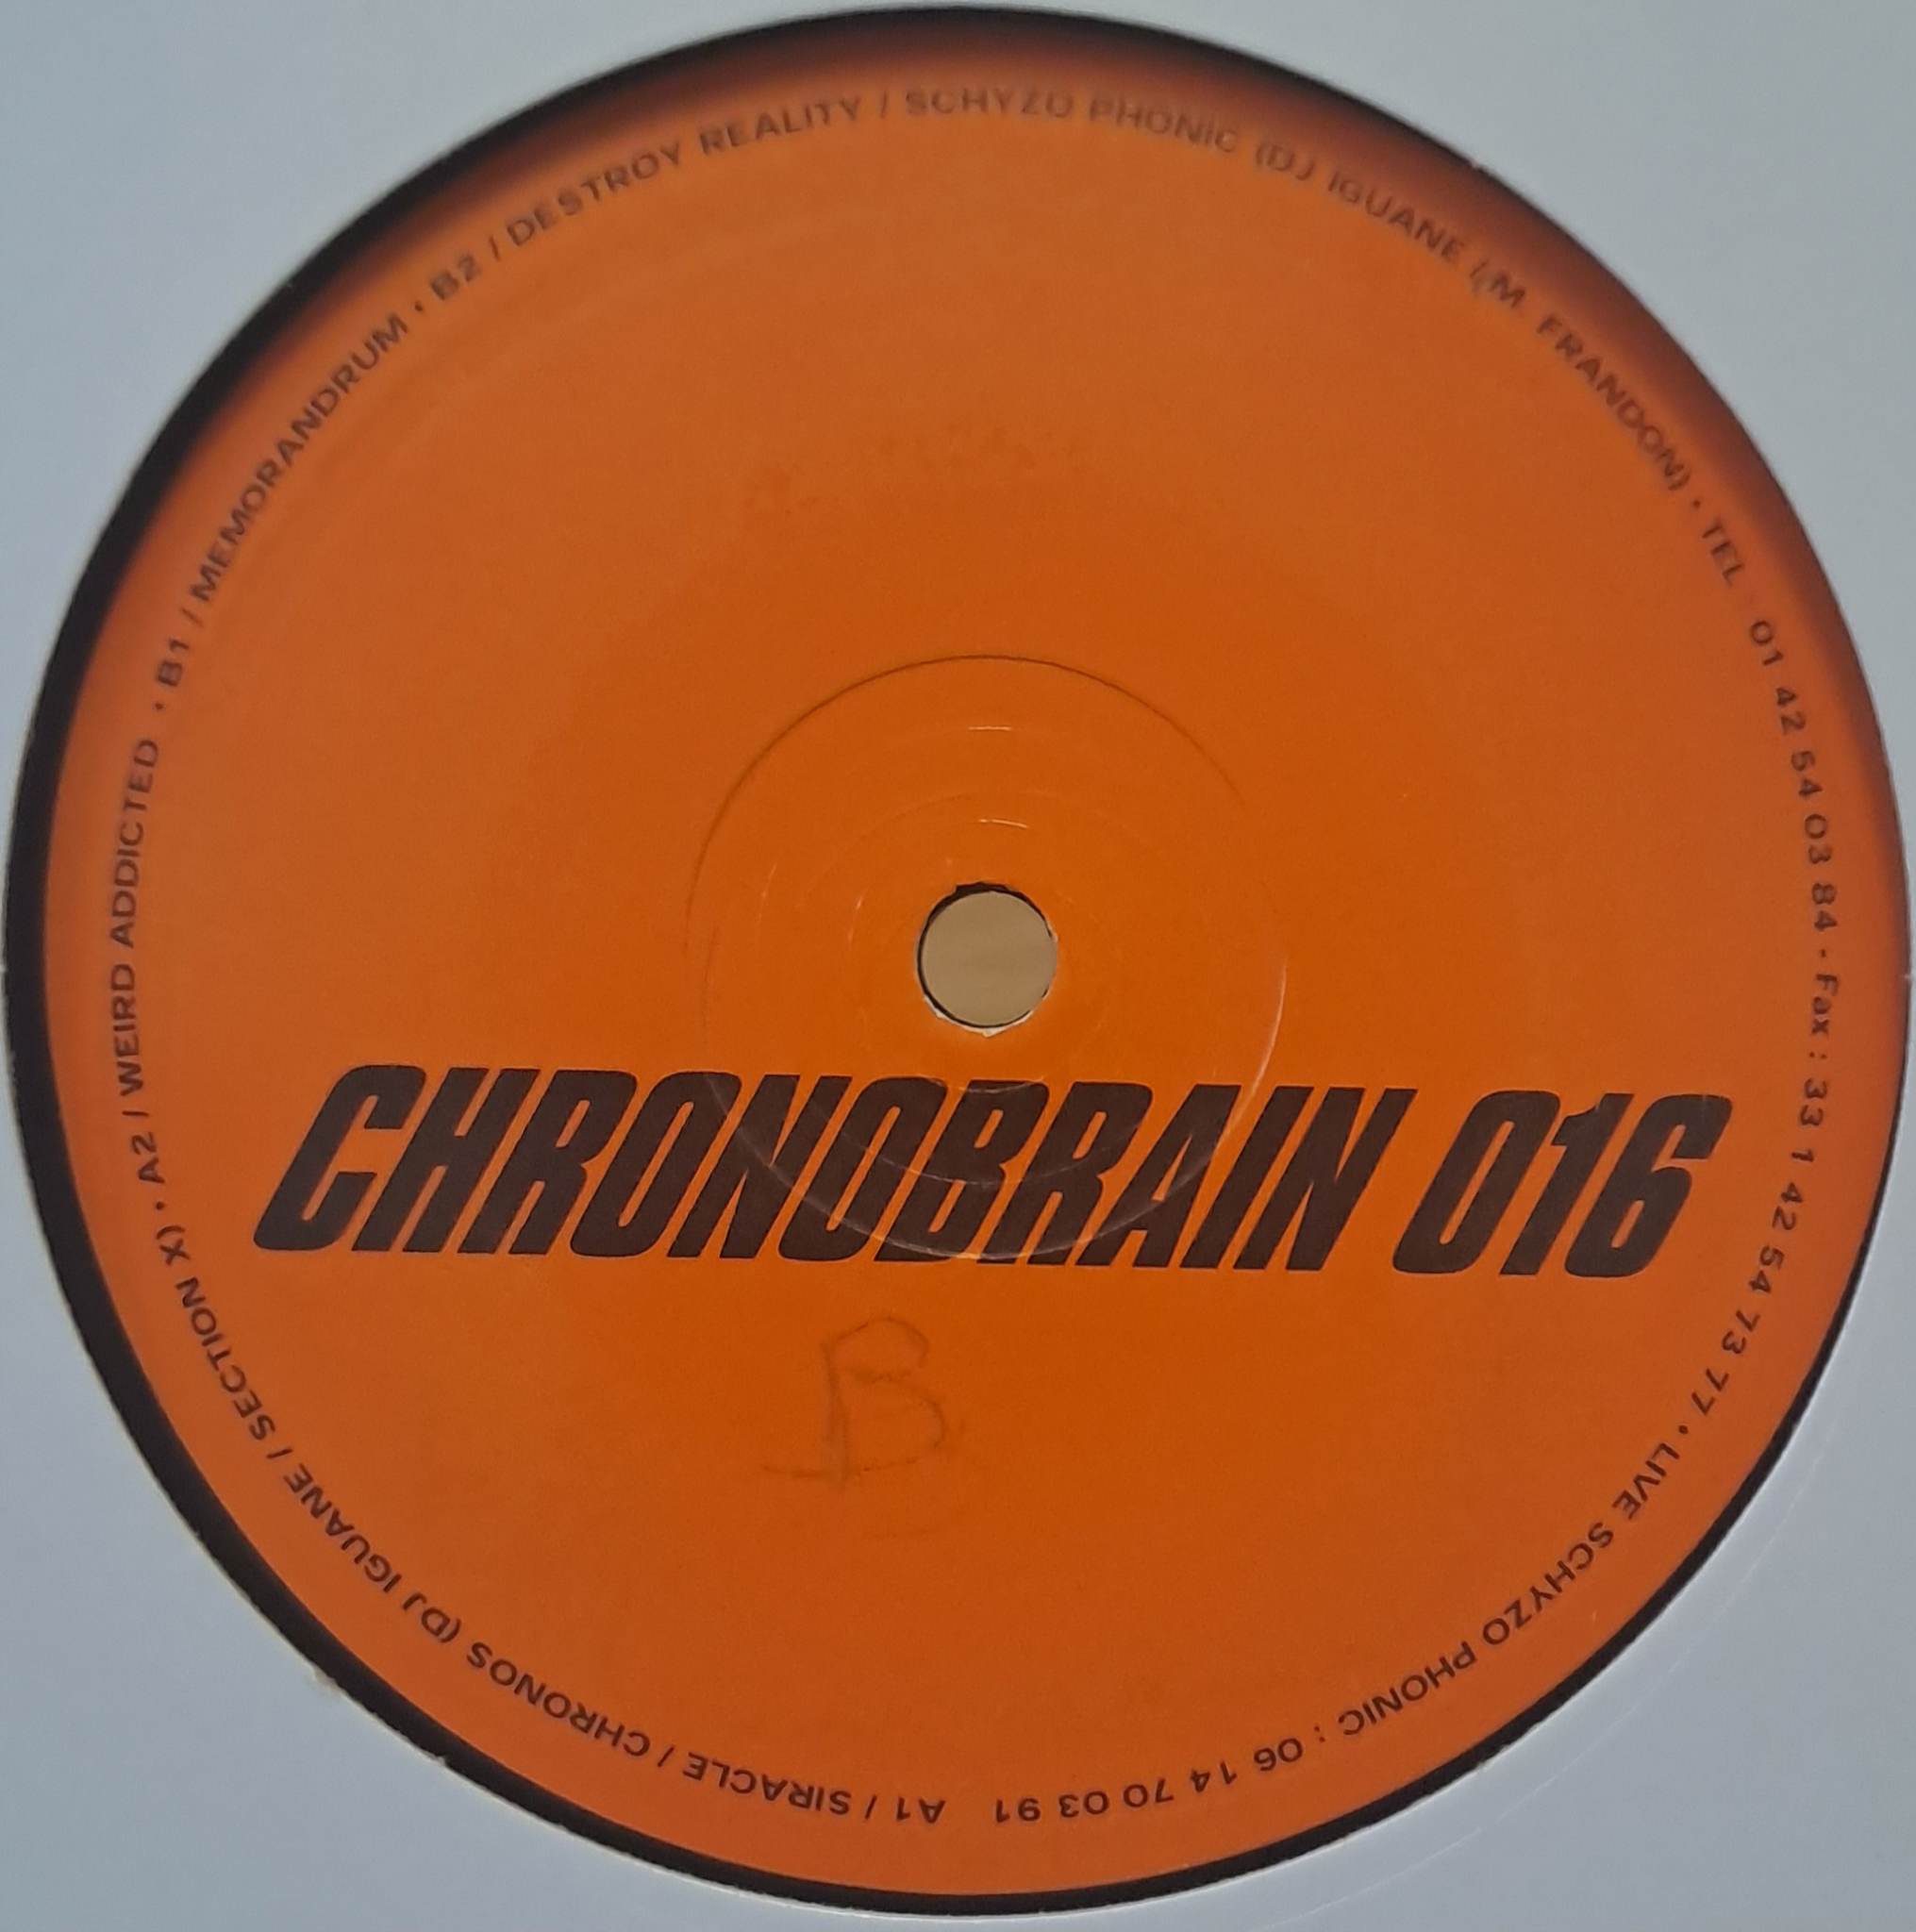 Chronobrain16 - vinyle freetekno